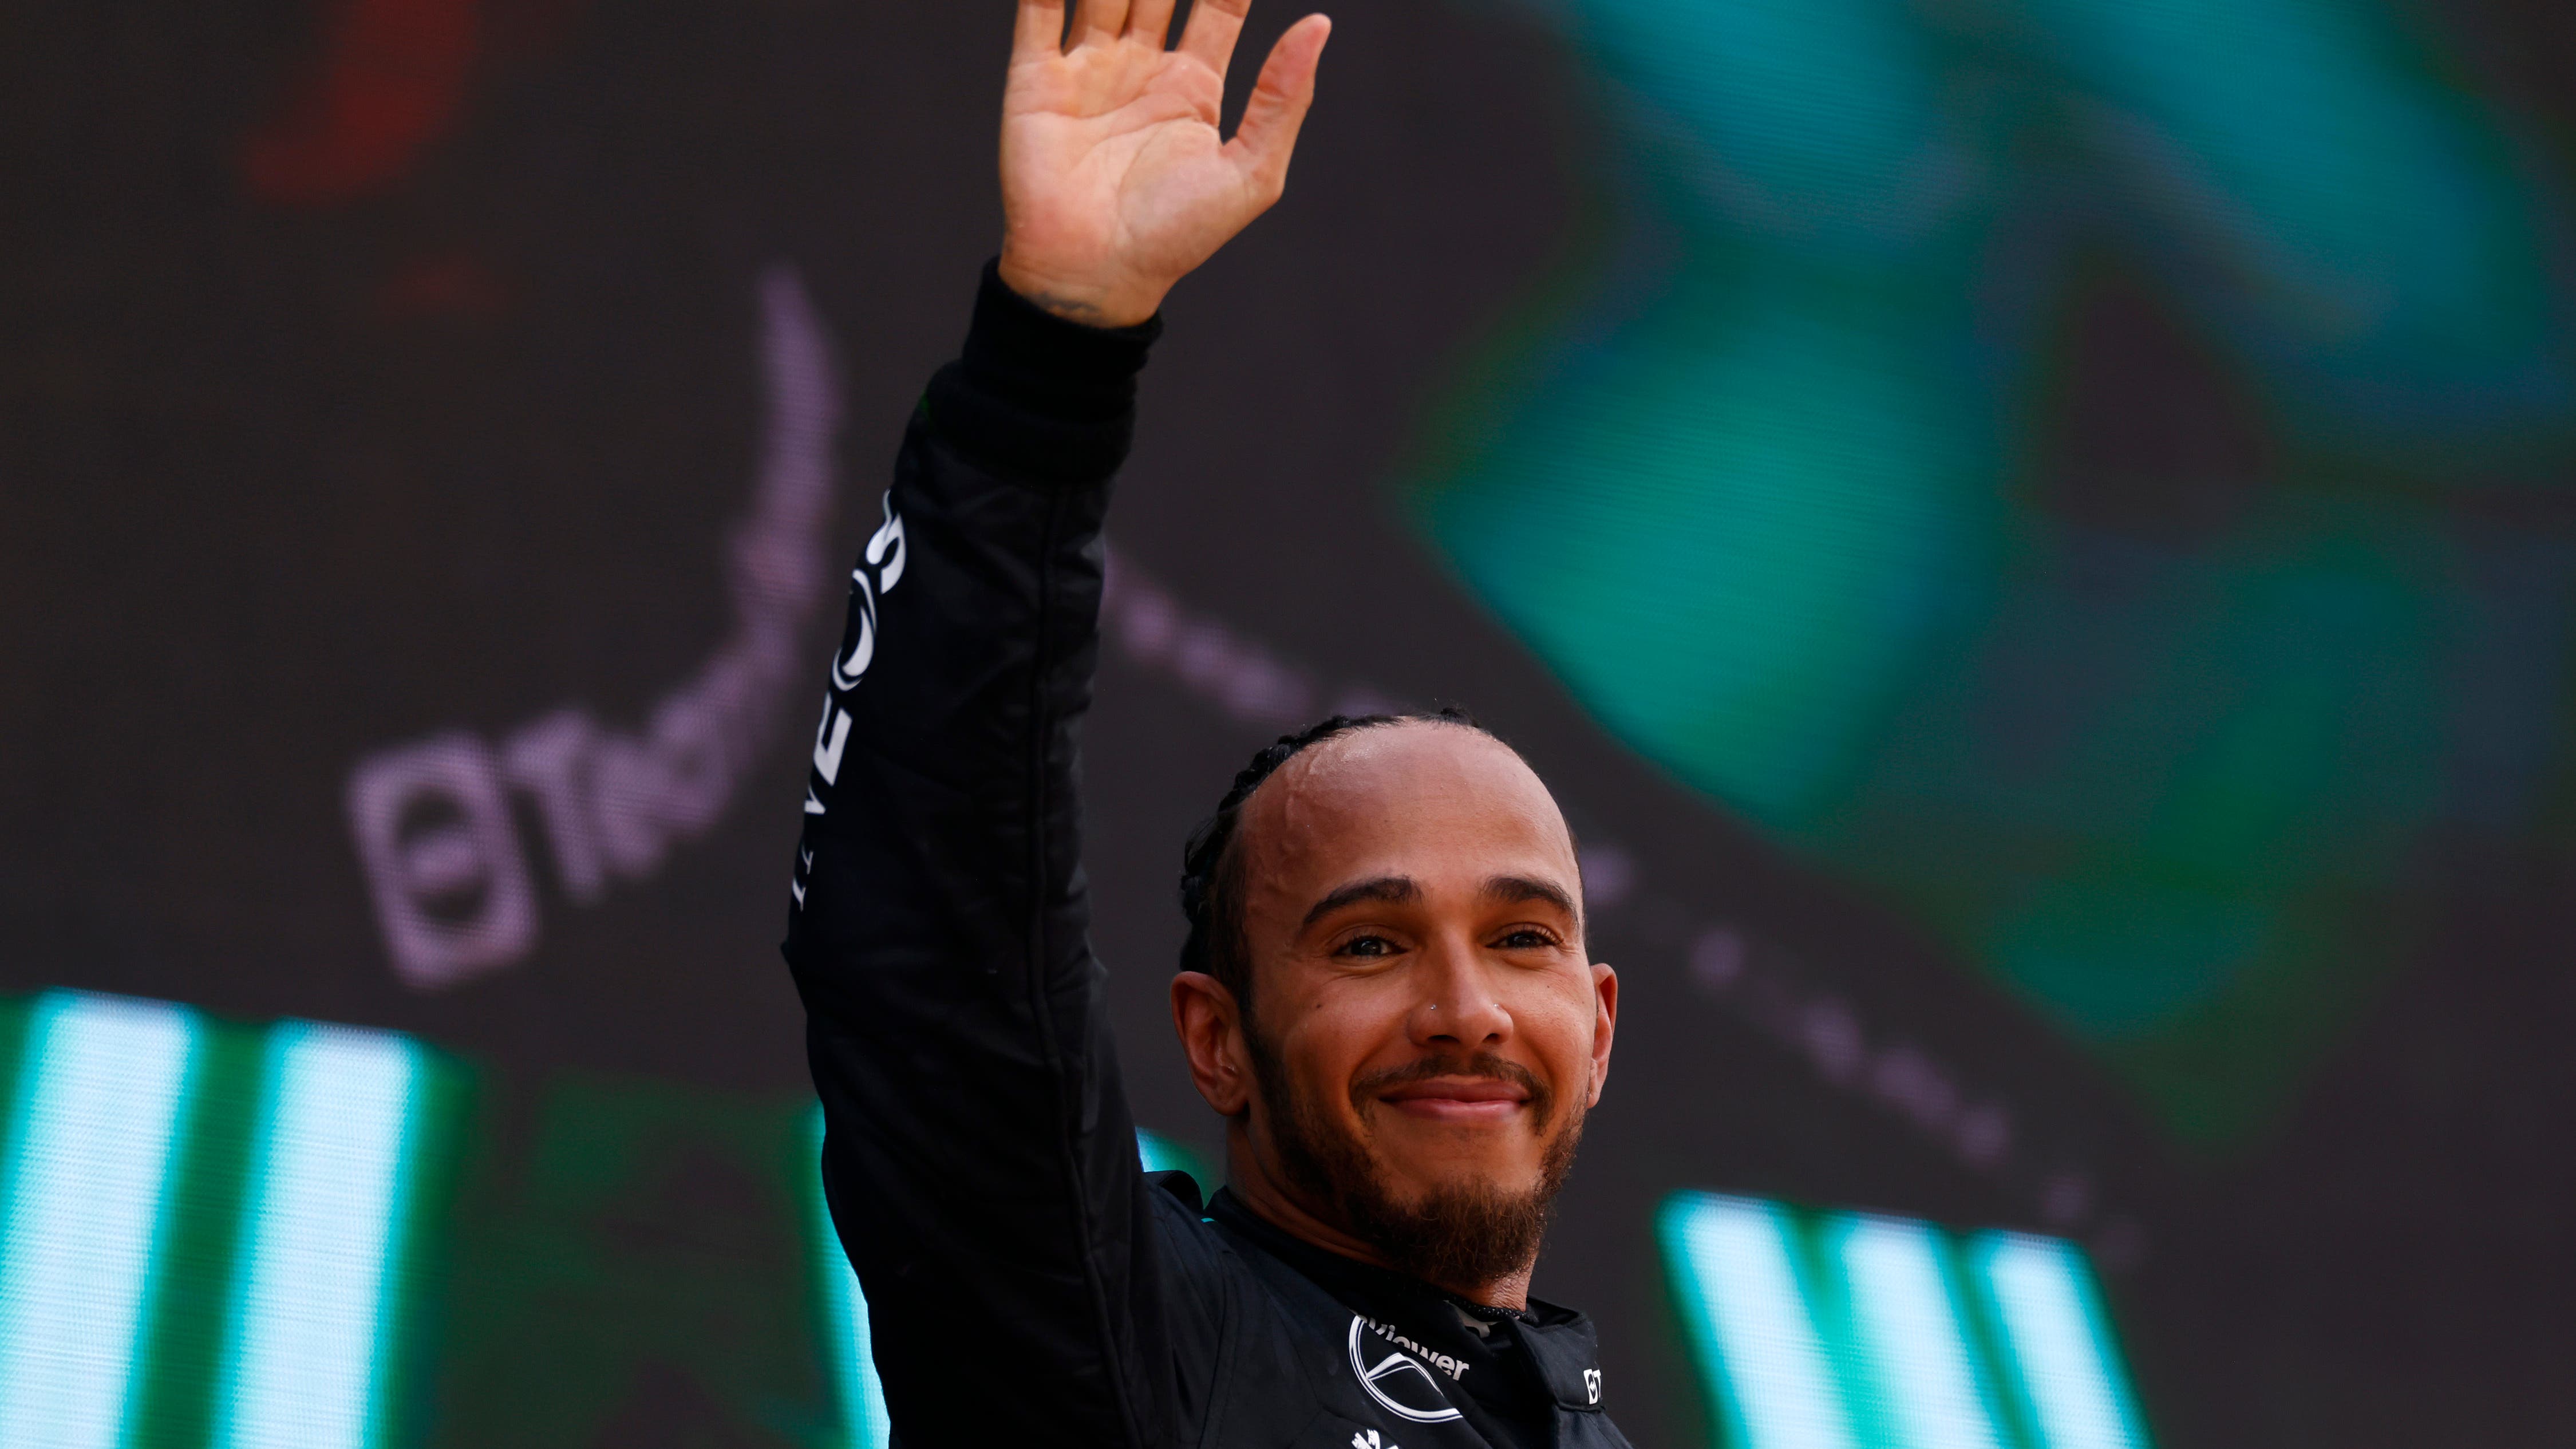 Lewis Hamilton has no regrets over Ferrari switch despite Mercedes improvement